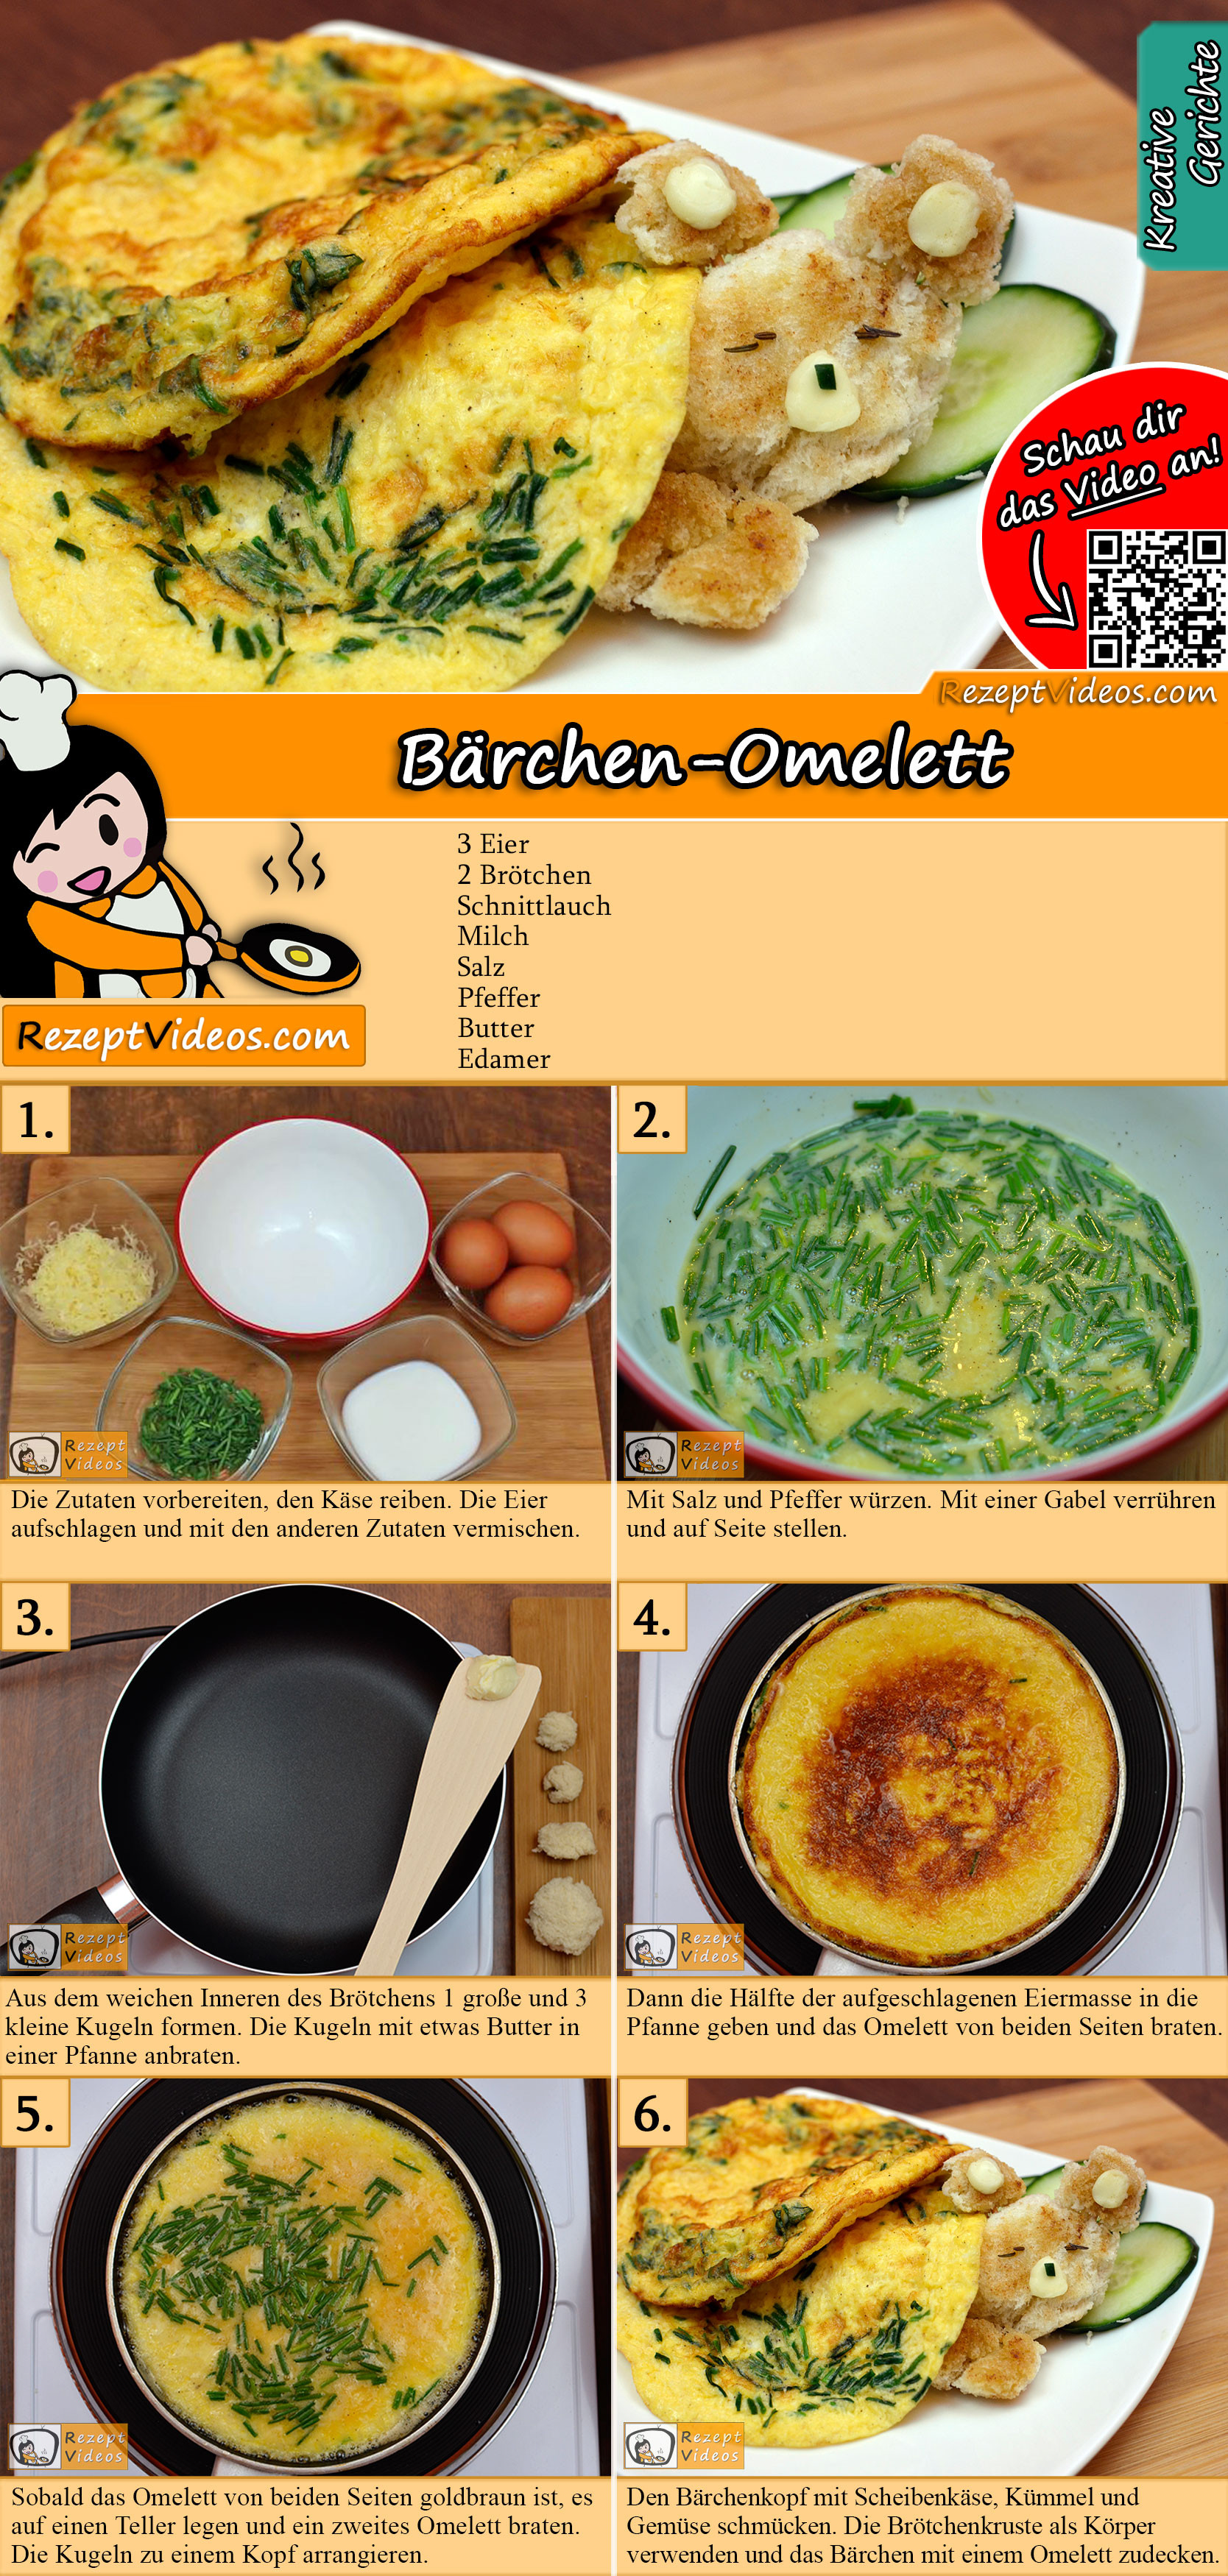 Bärchen-Omelett Rezept mit Video